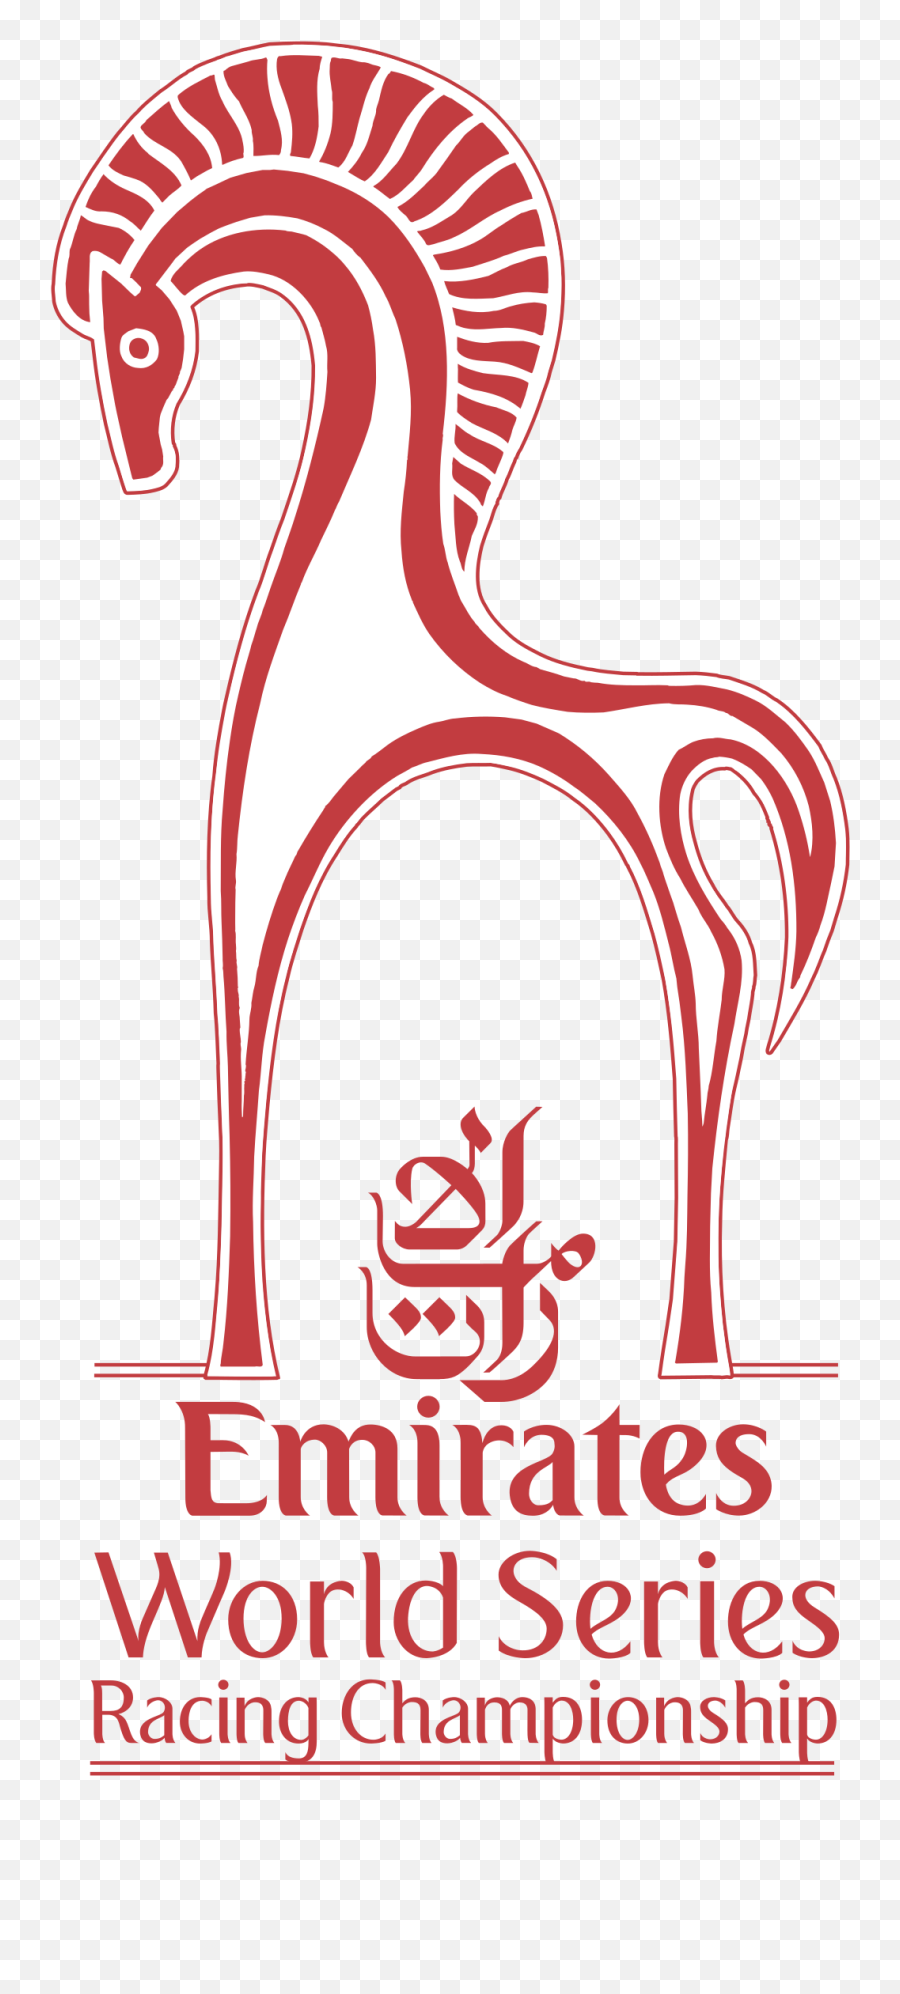 Emirates World Series Racing Championship Logo Png - Turkish Airlines And Emirates,Emirates Logo